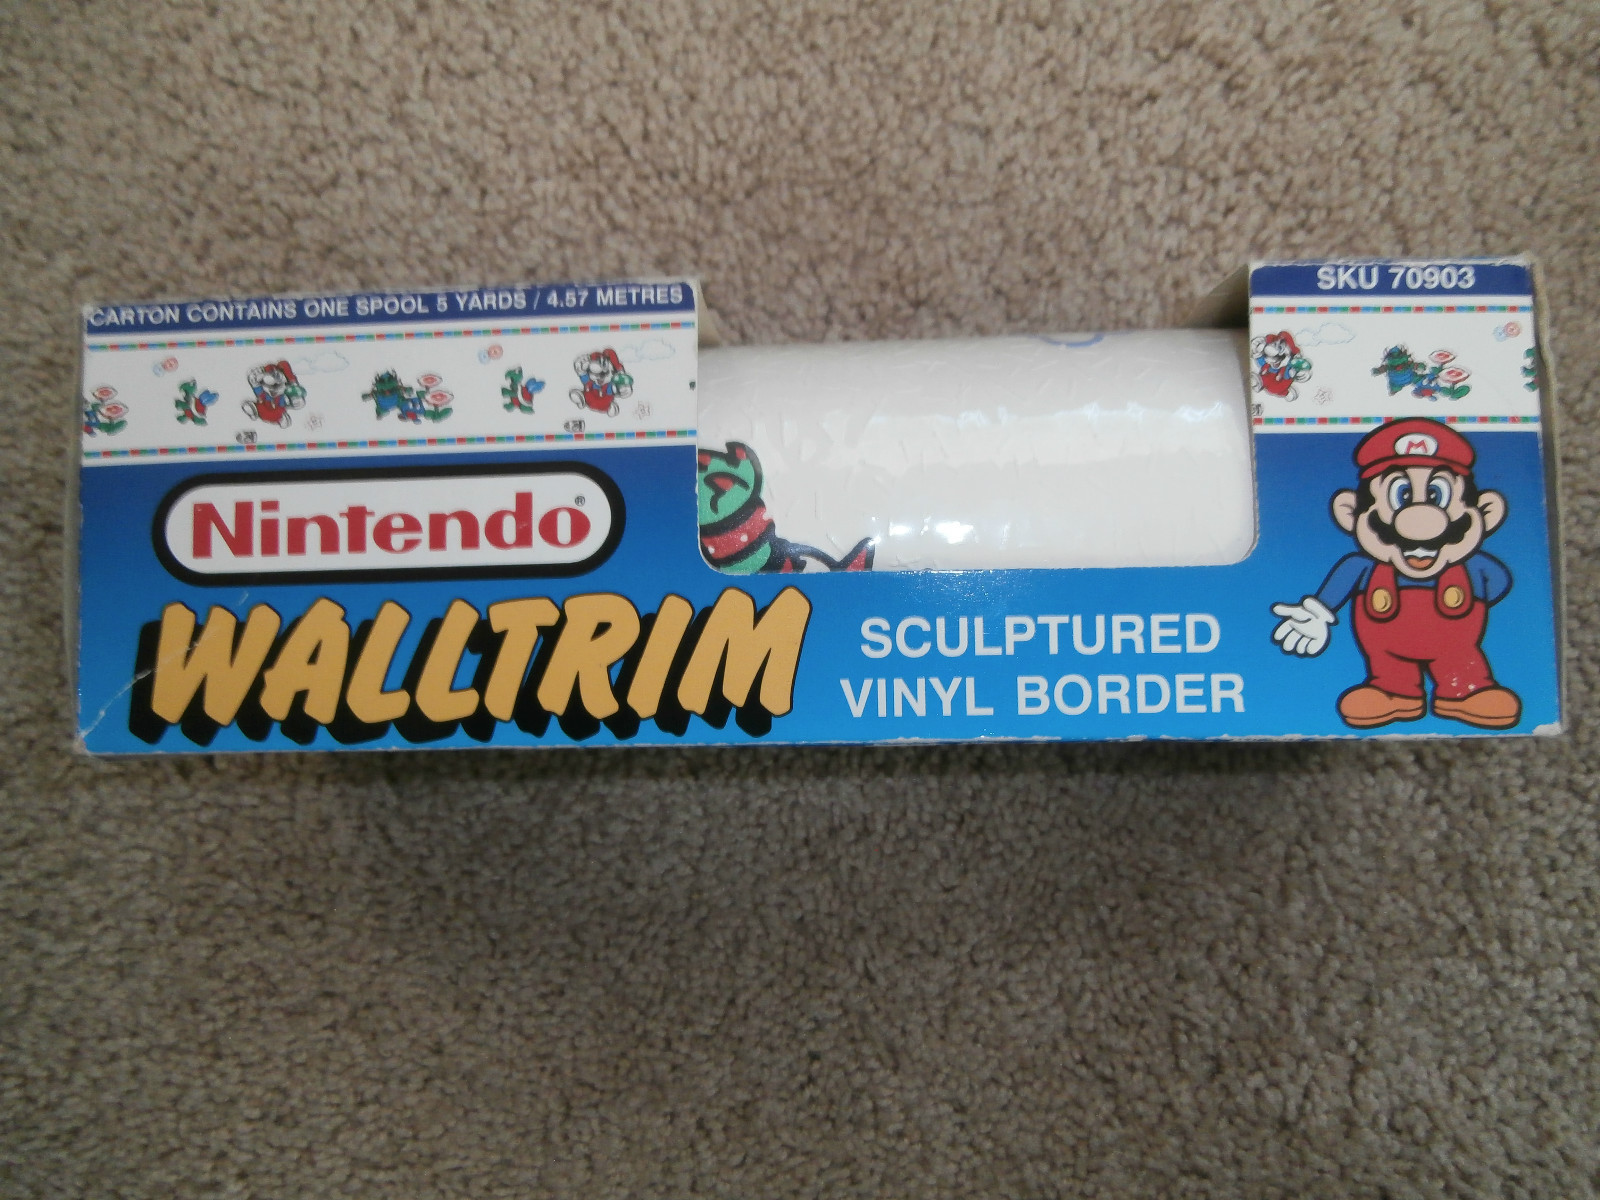 Mario Wallpaper Wall Trim Vinyl Border Yds Video Game Auctions